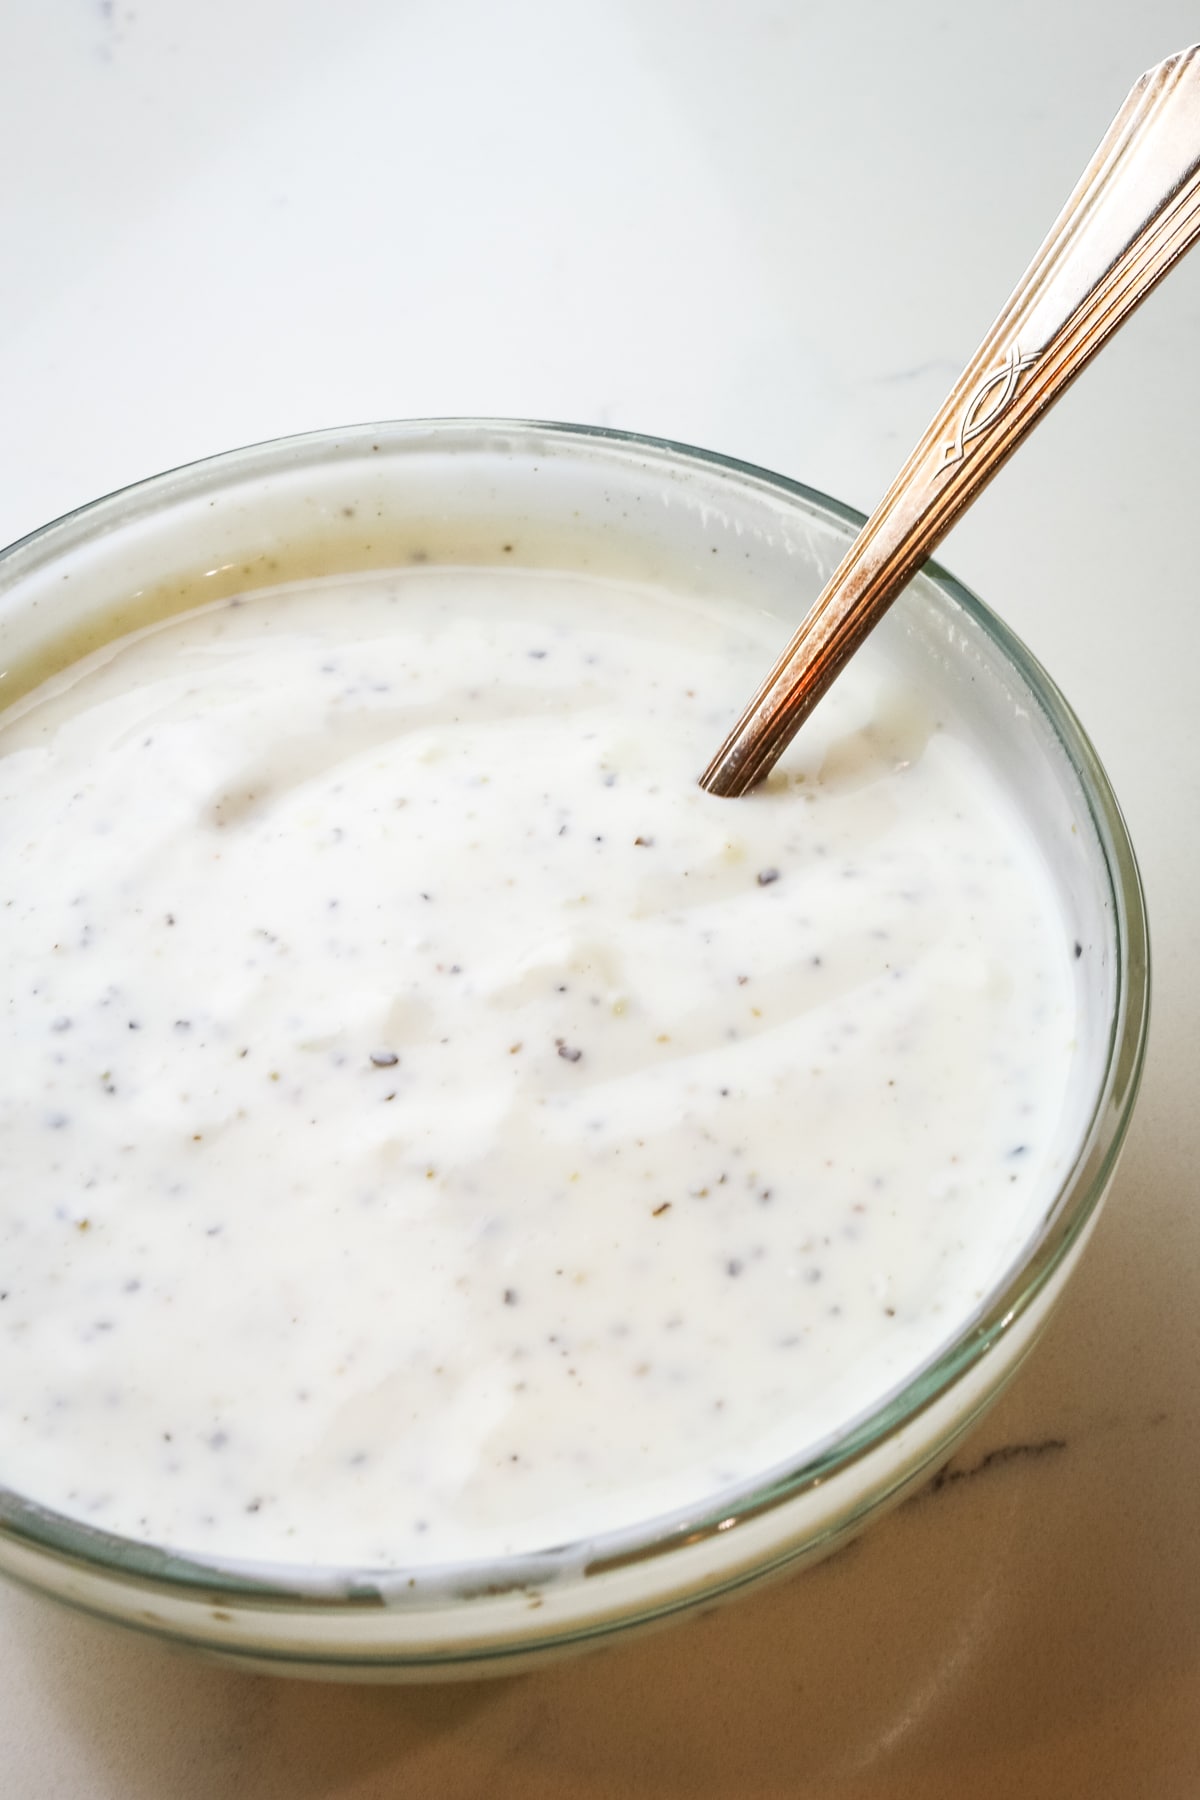 yogurt sauce in clear ramekin with spoon out.